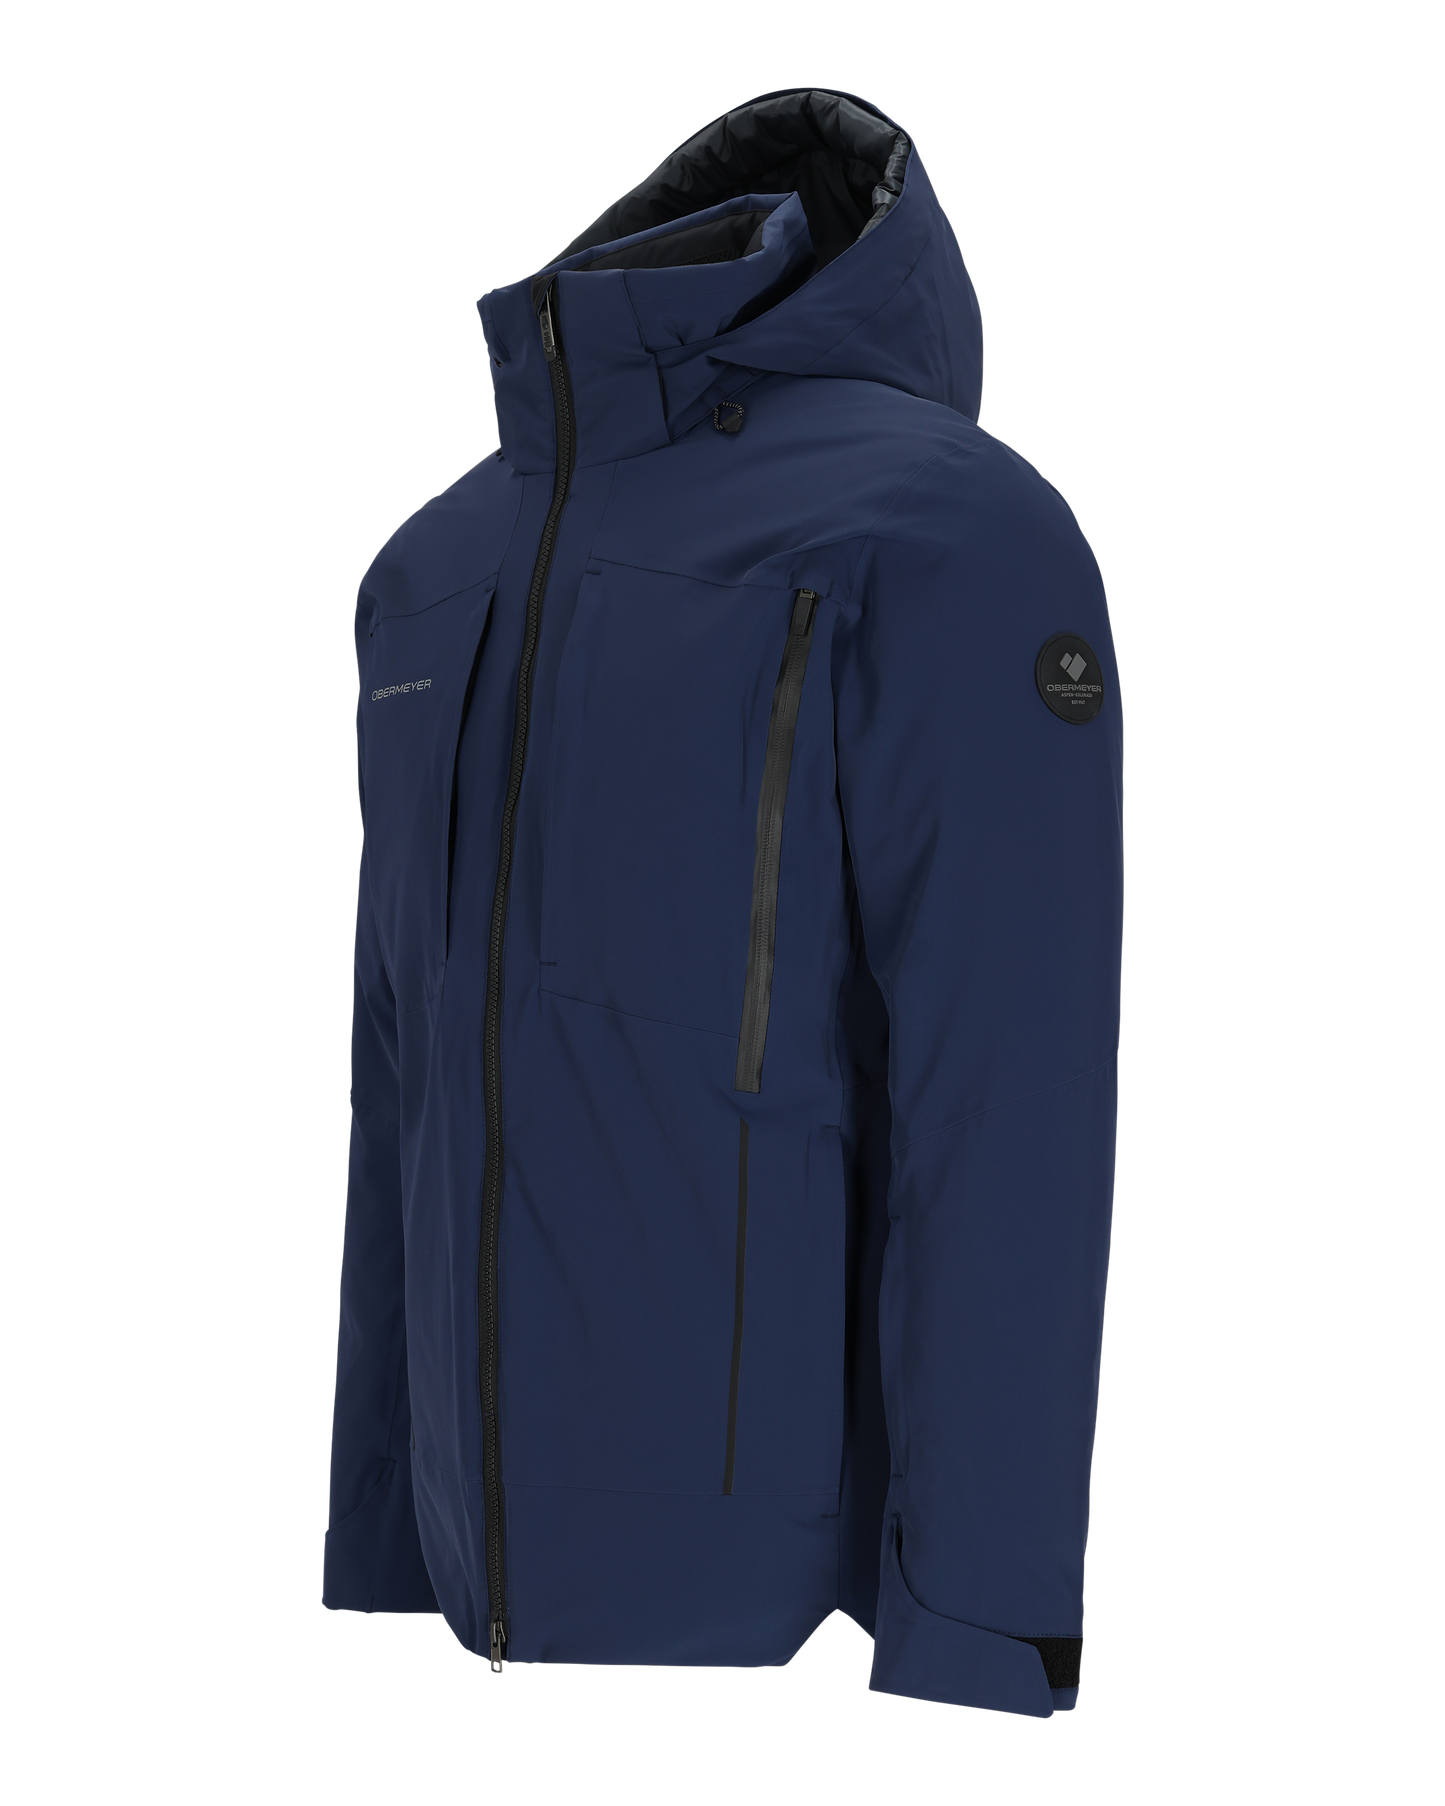 Xenon Jacket – Obermeyer E-Commerce